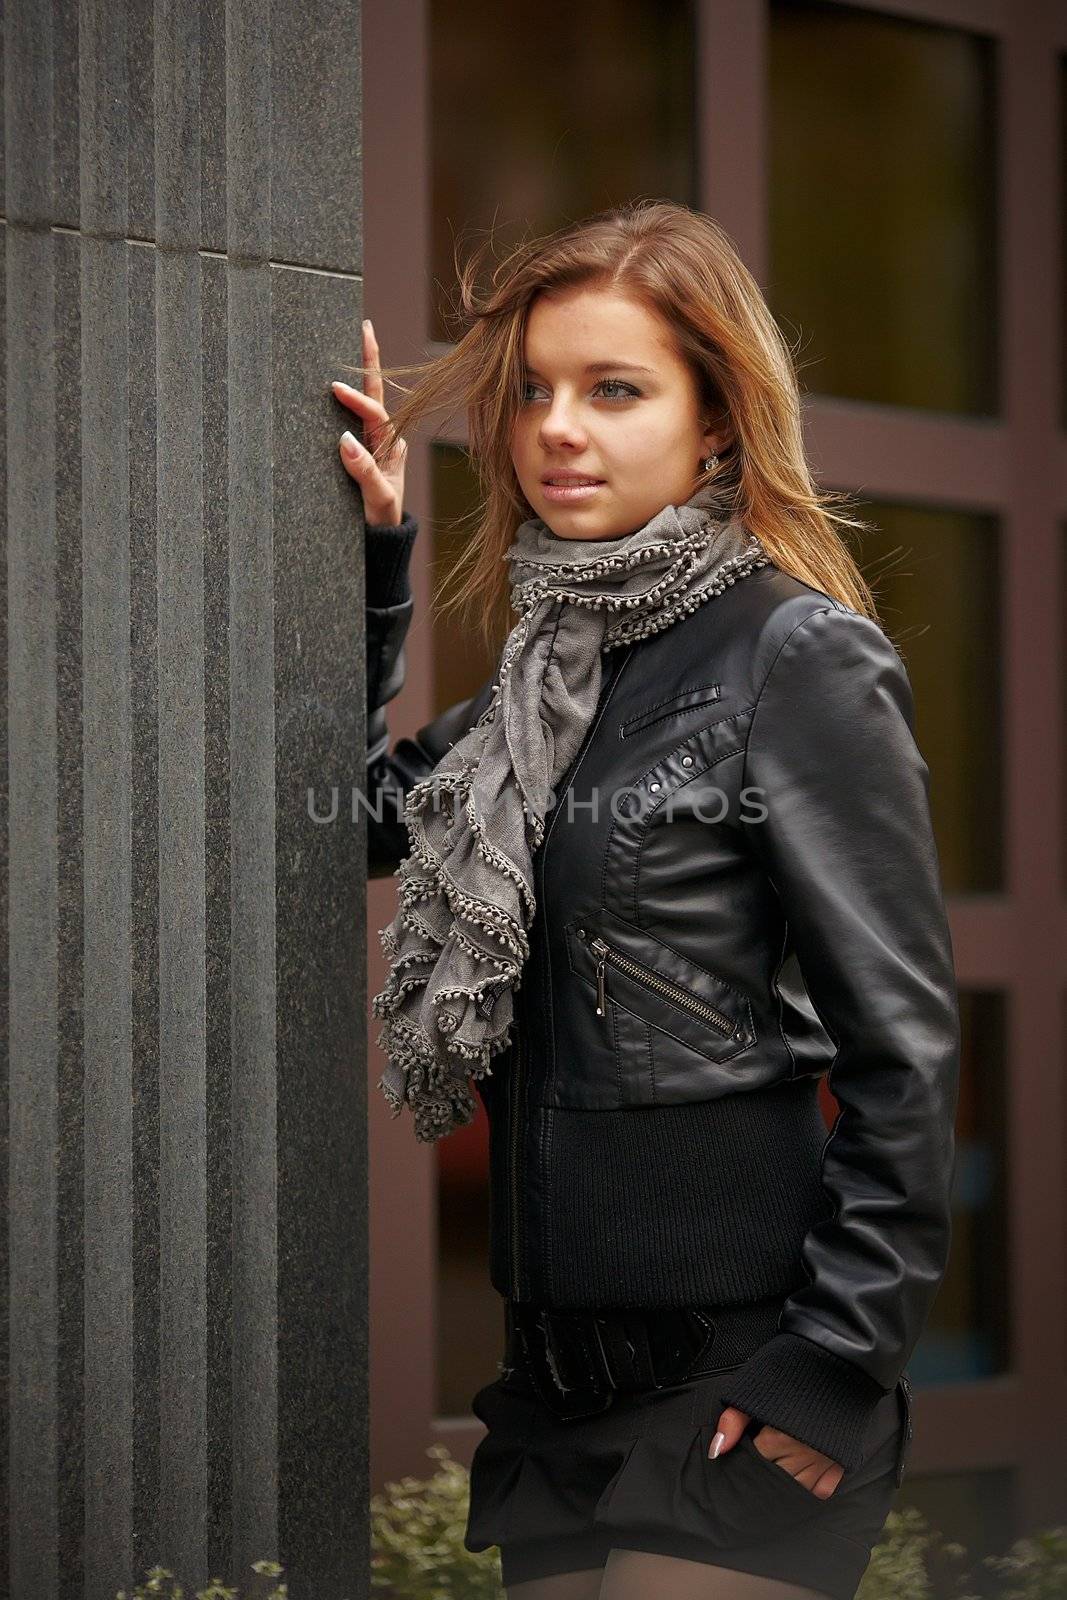 Beautiful girl in autumn coat standing near expensive granite facade. Wind waving her hair beautifully. girl smiling